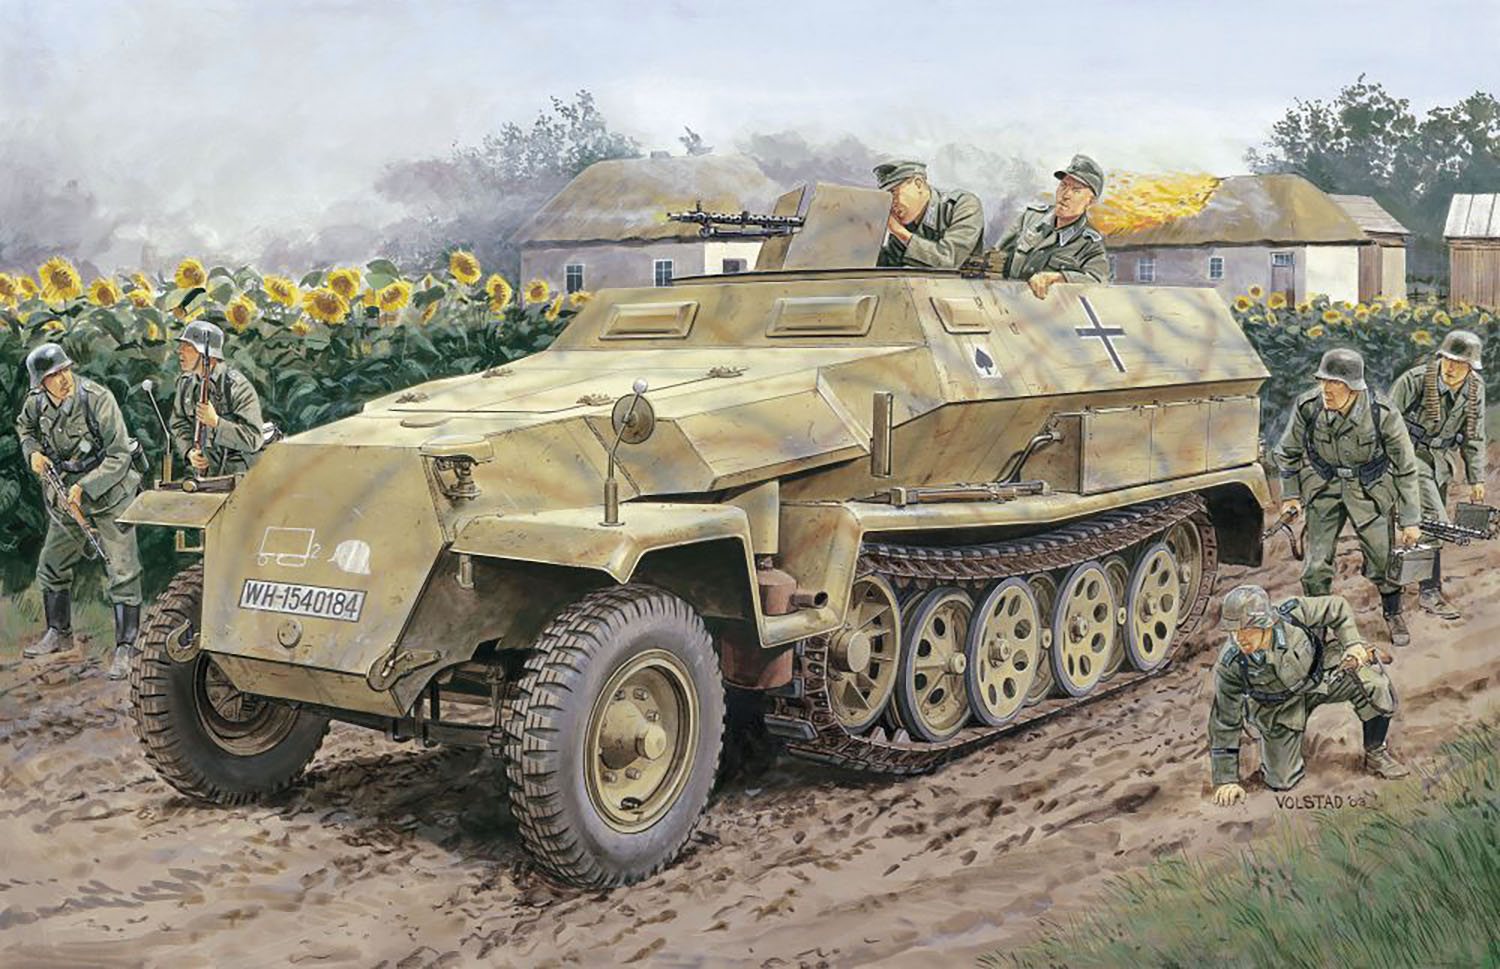 1/35 WW.II ドイツ軍 Sd.Kfz.251 Ausf.C フィギュア4体付属（ボーナスパーツひまわり付属）